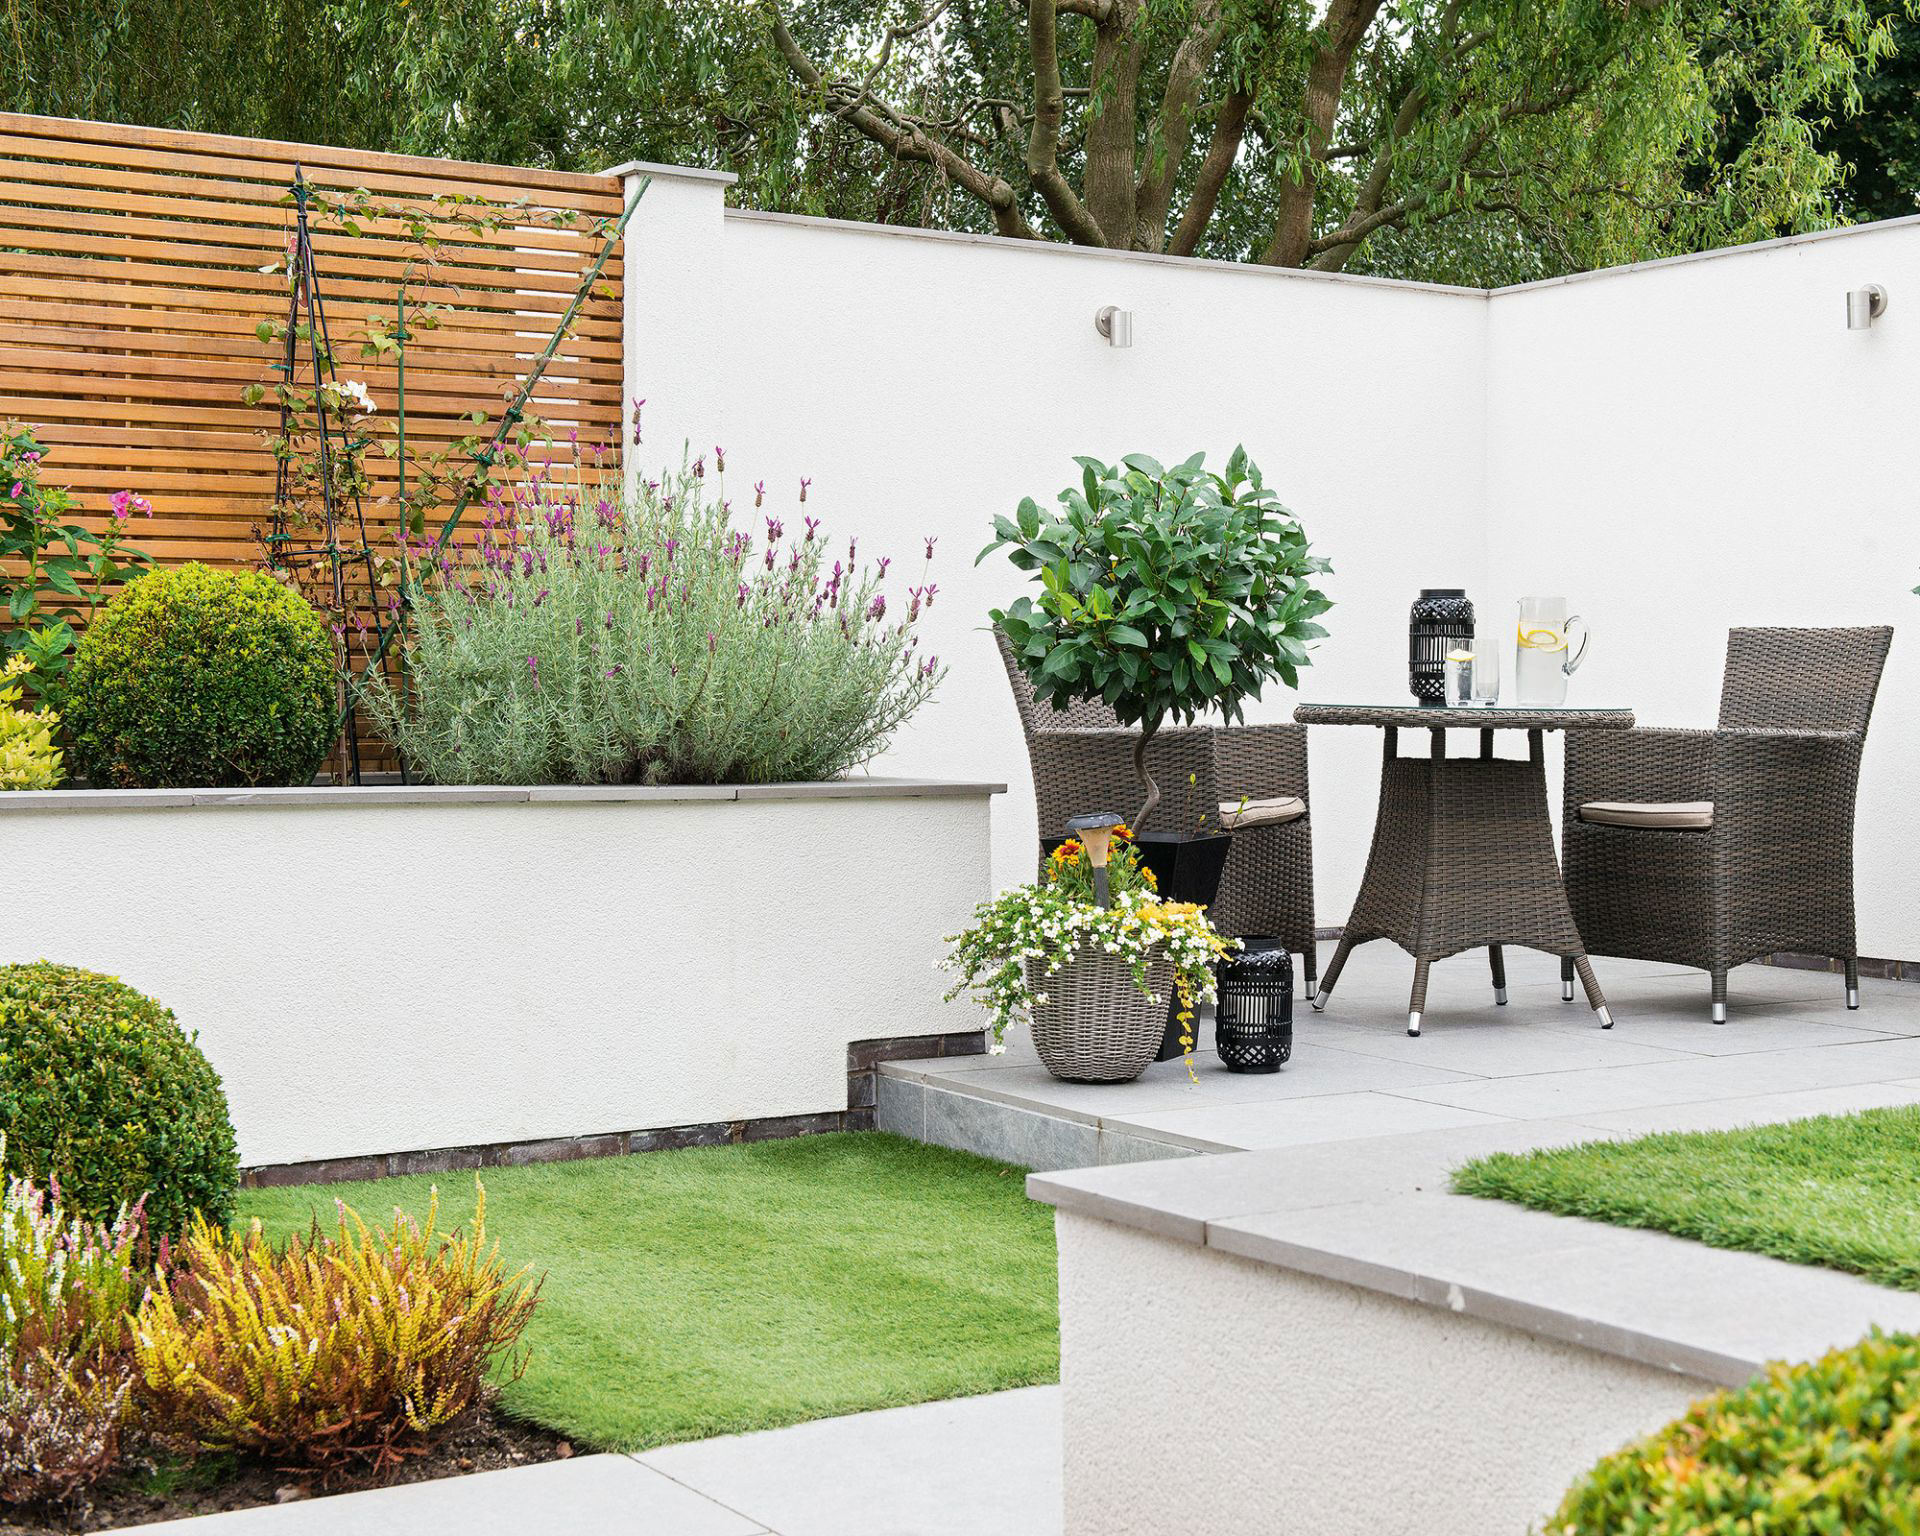 Small backyard ideas – 10 beautiful designs for tiny gardens